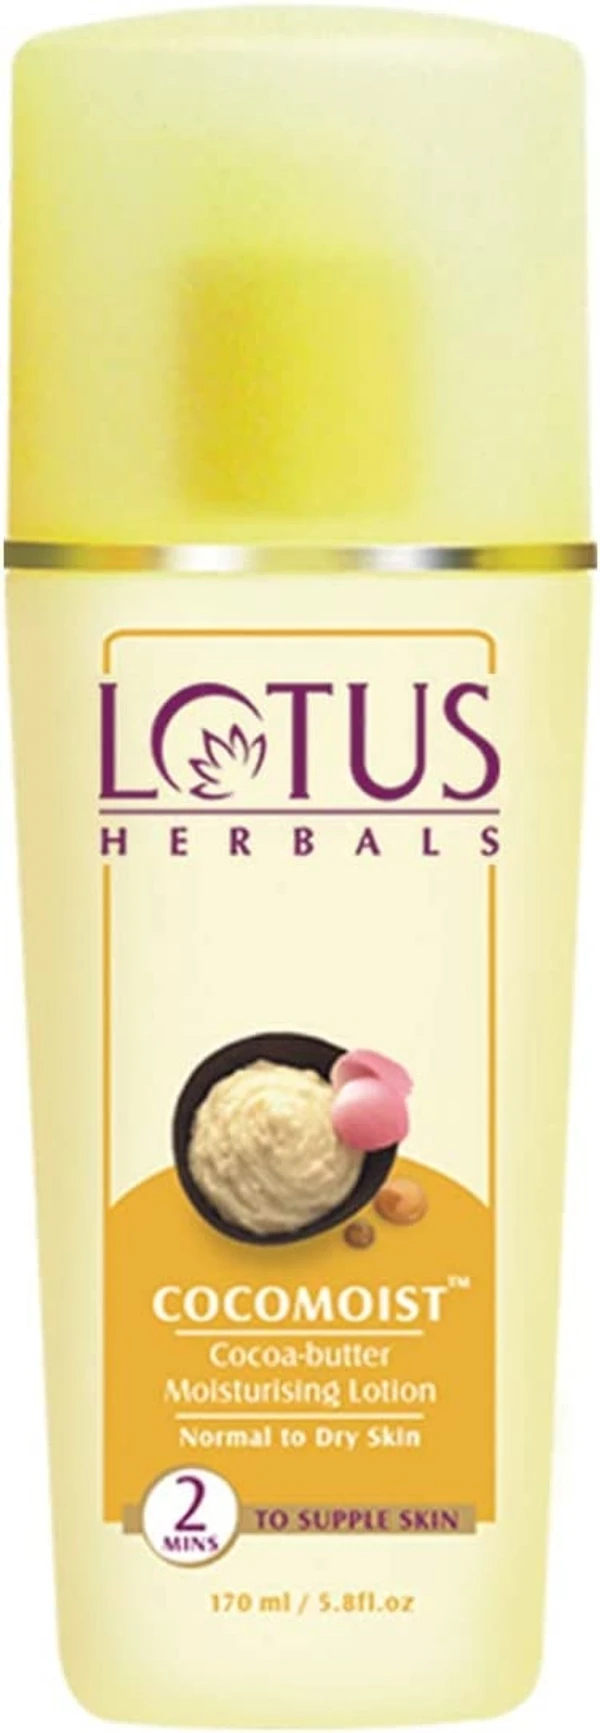 Lotus Herbals Cocomoist Cocoa Butter Moisturising Lotion, 170ml